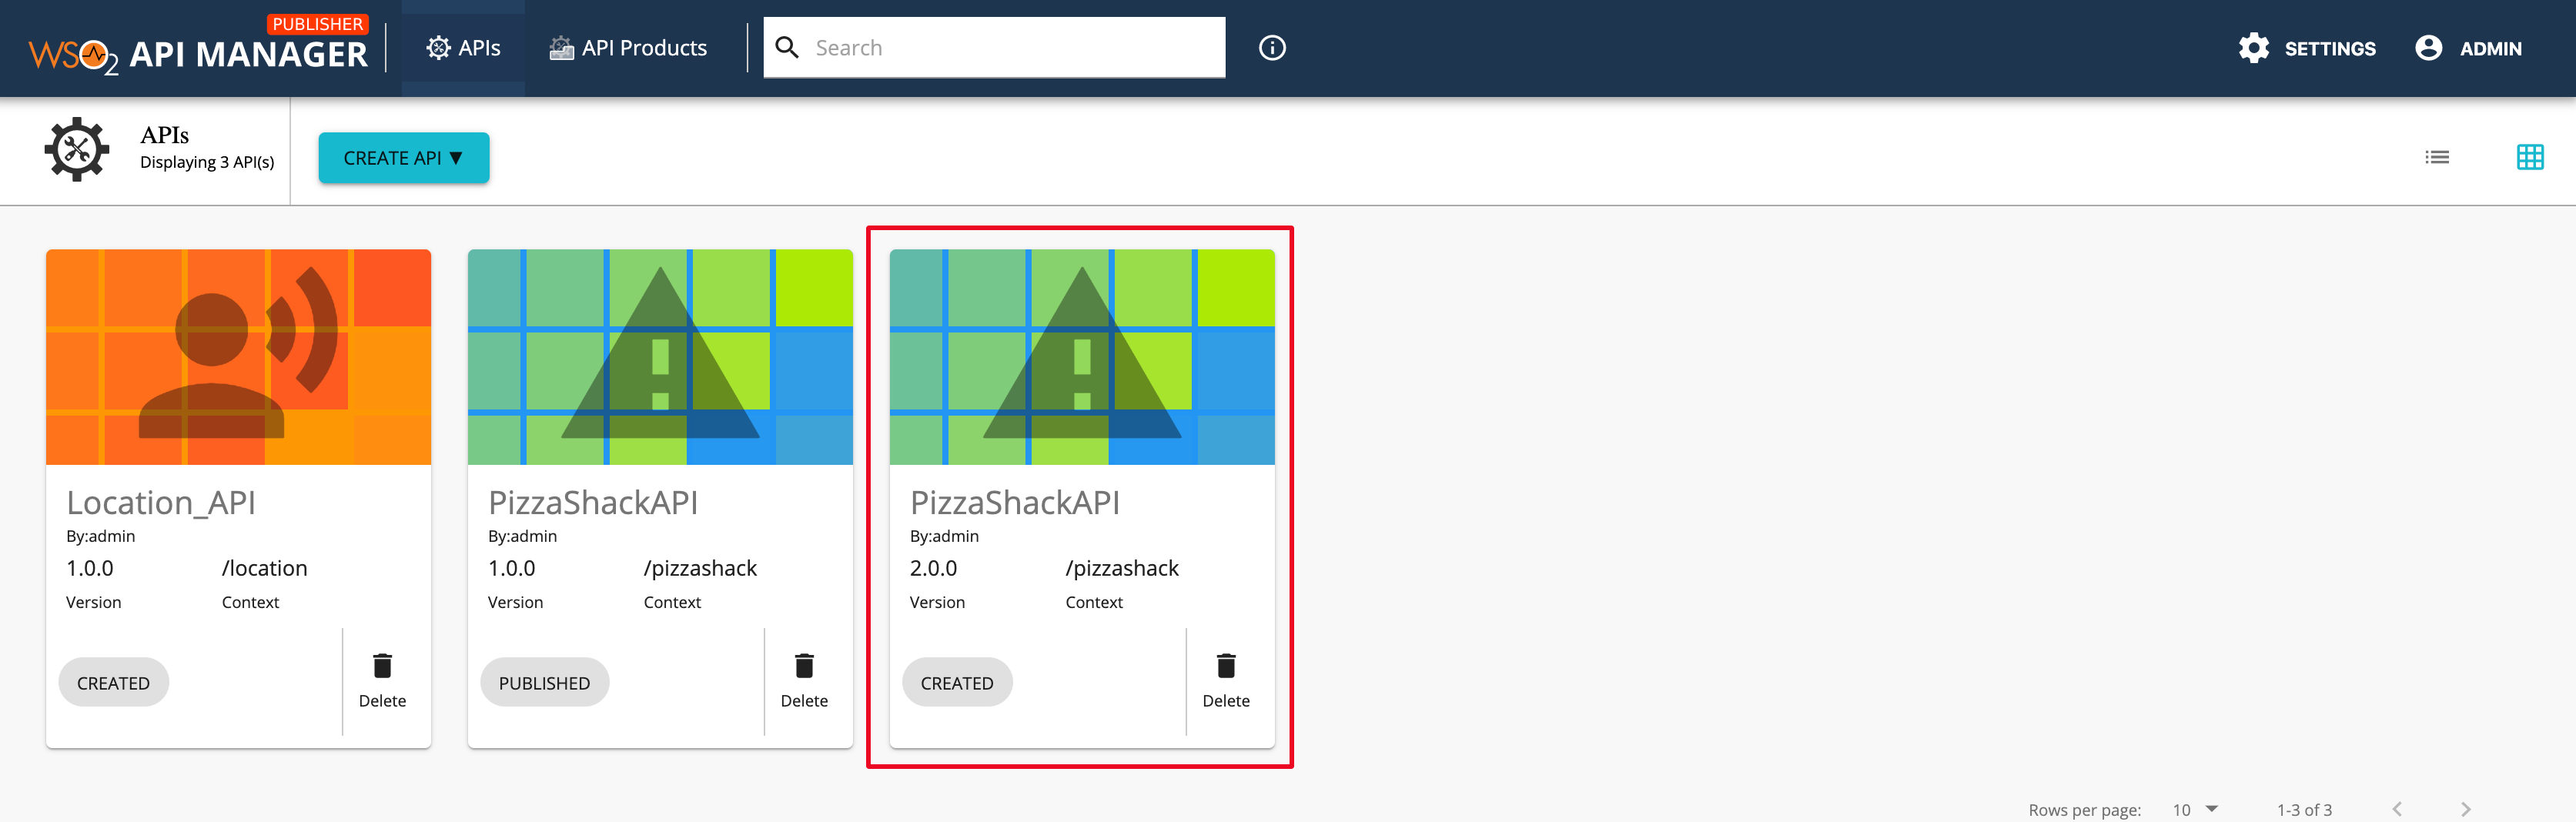 PizzaShack API in the Publisher